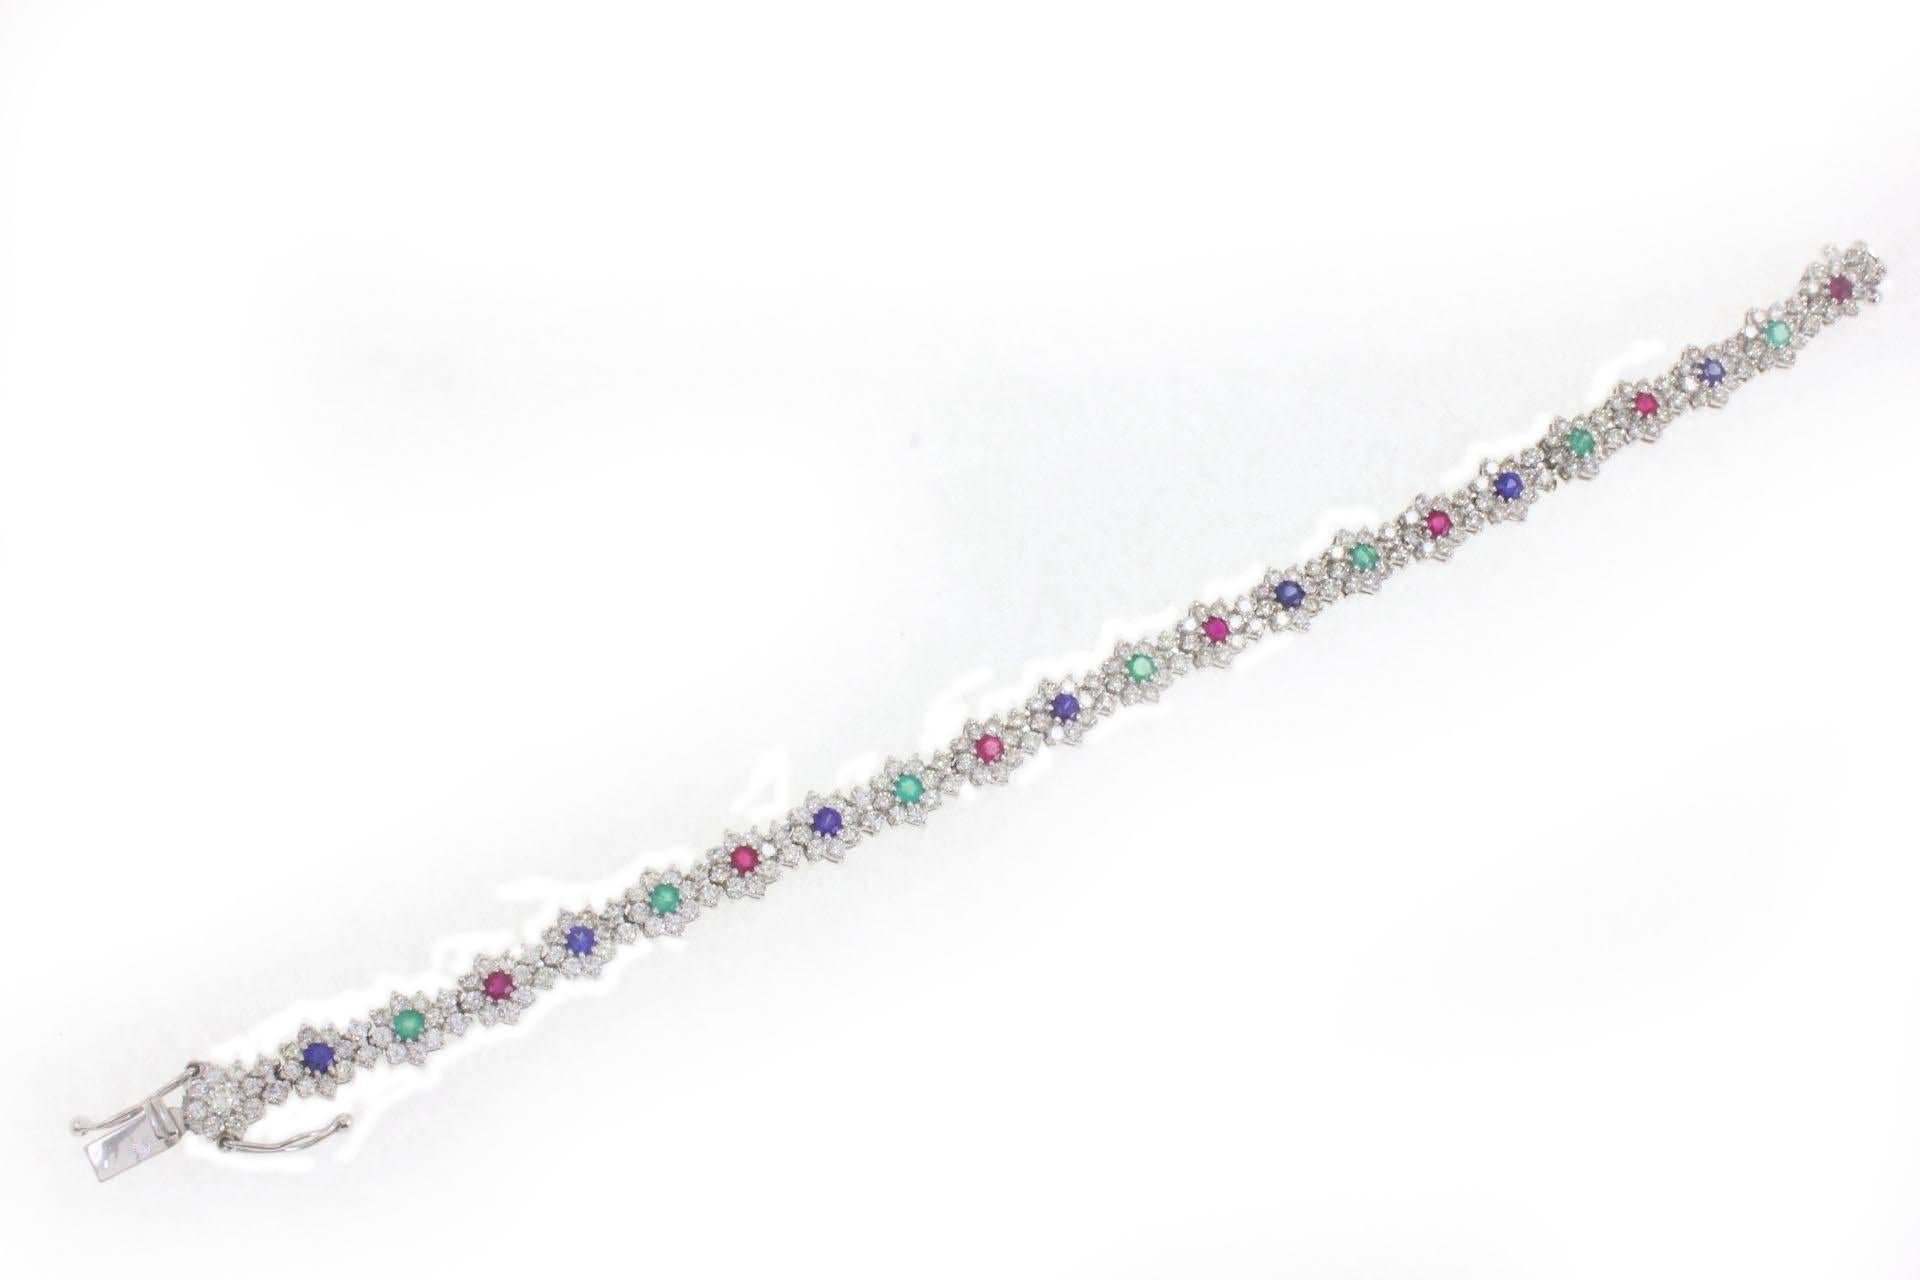 Brilliant Cut Rubies, Emeralds, Sapphires, Diamonds, 14 Kt White Gold Bracelet. For Sale